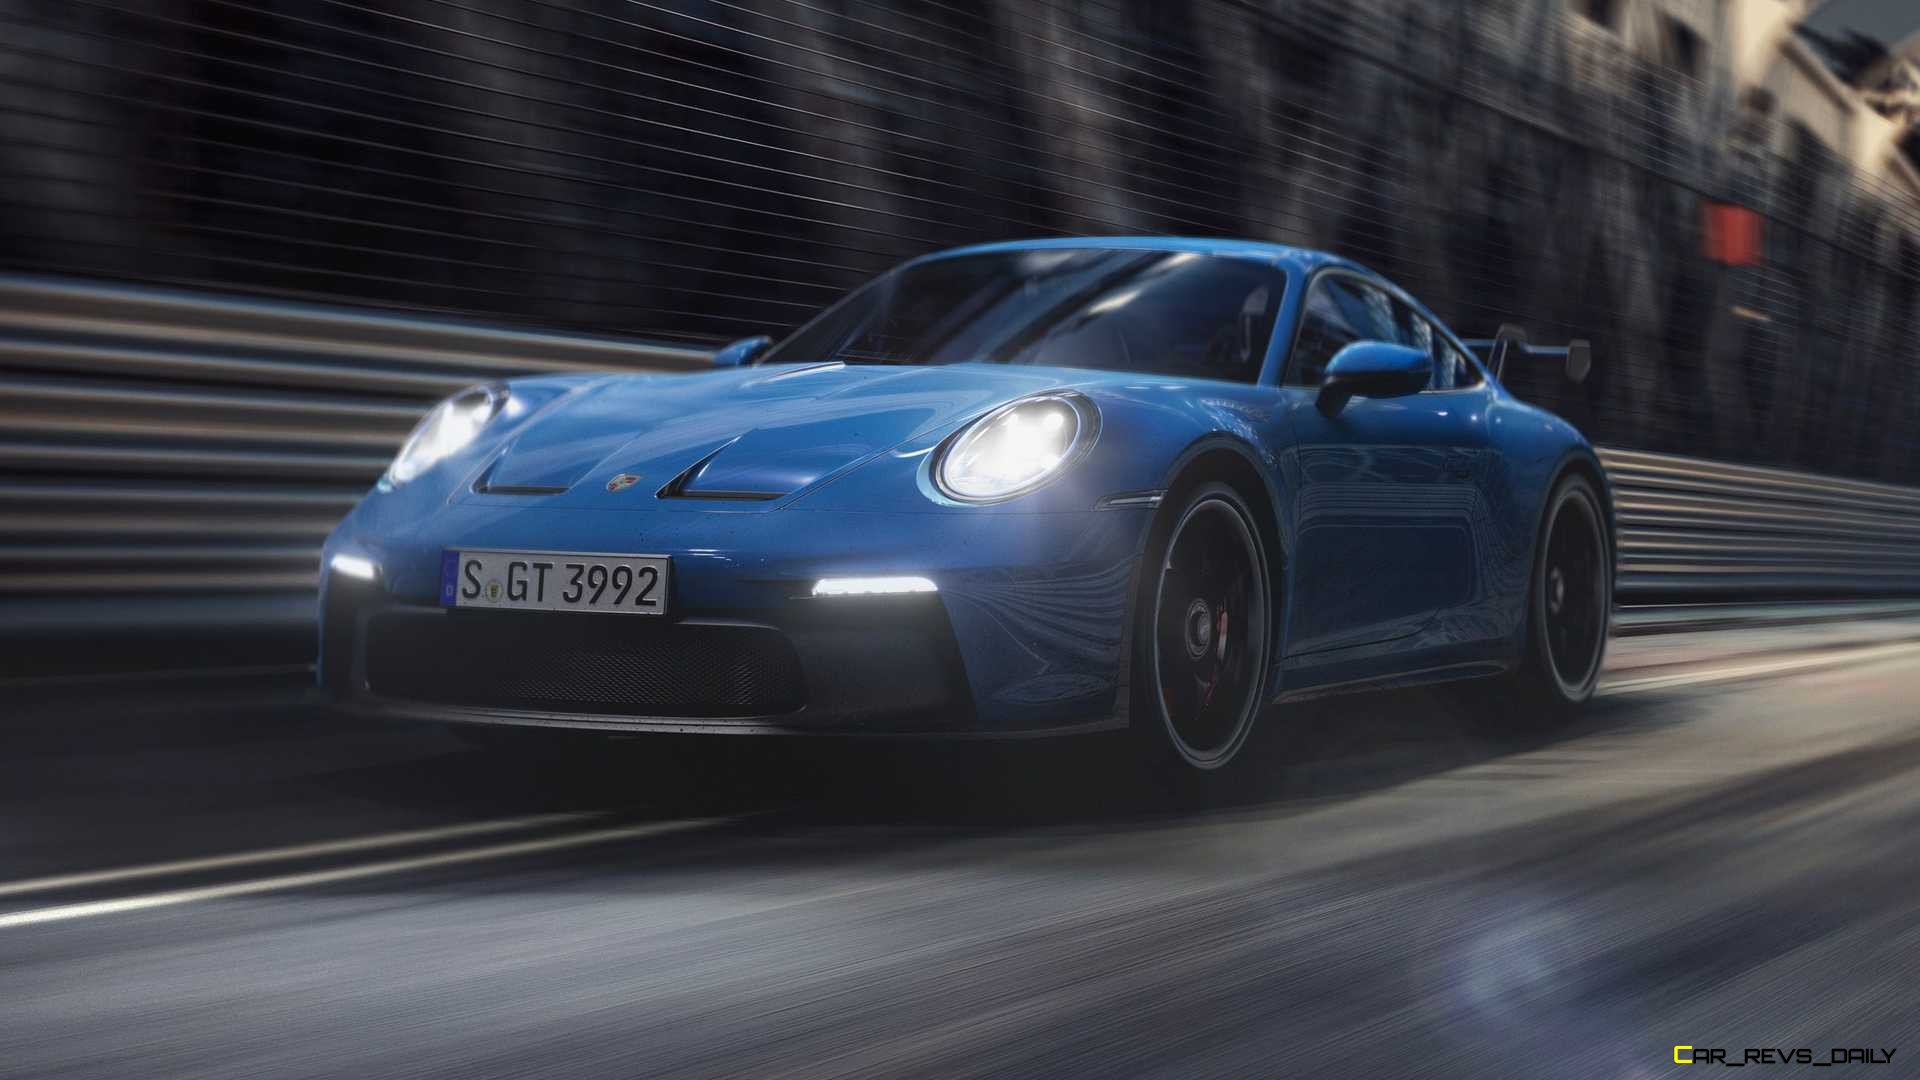 Porsche Unveils 2022 911 GT More Power And New Suspension Highlight Key Changes LATEST NEWS Car Revs Daily.com